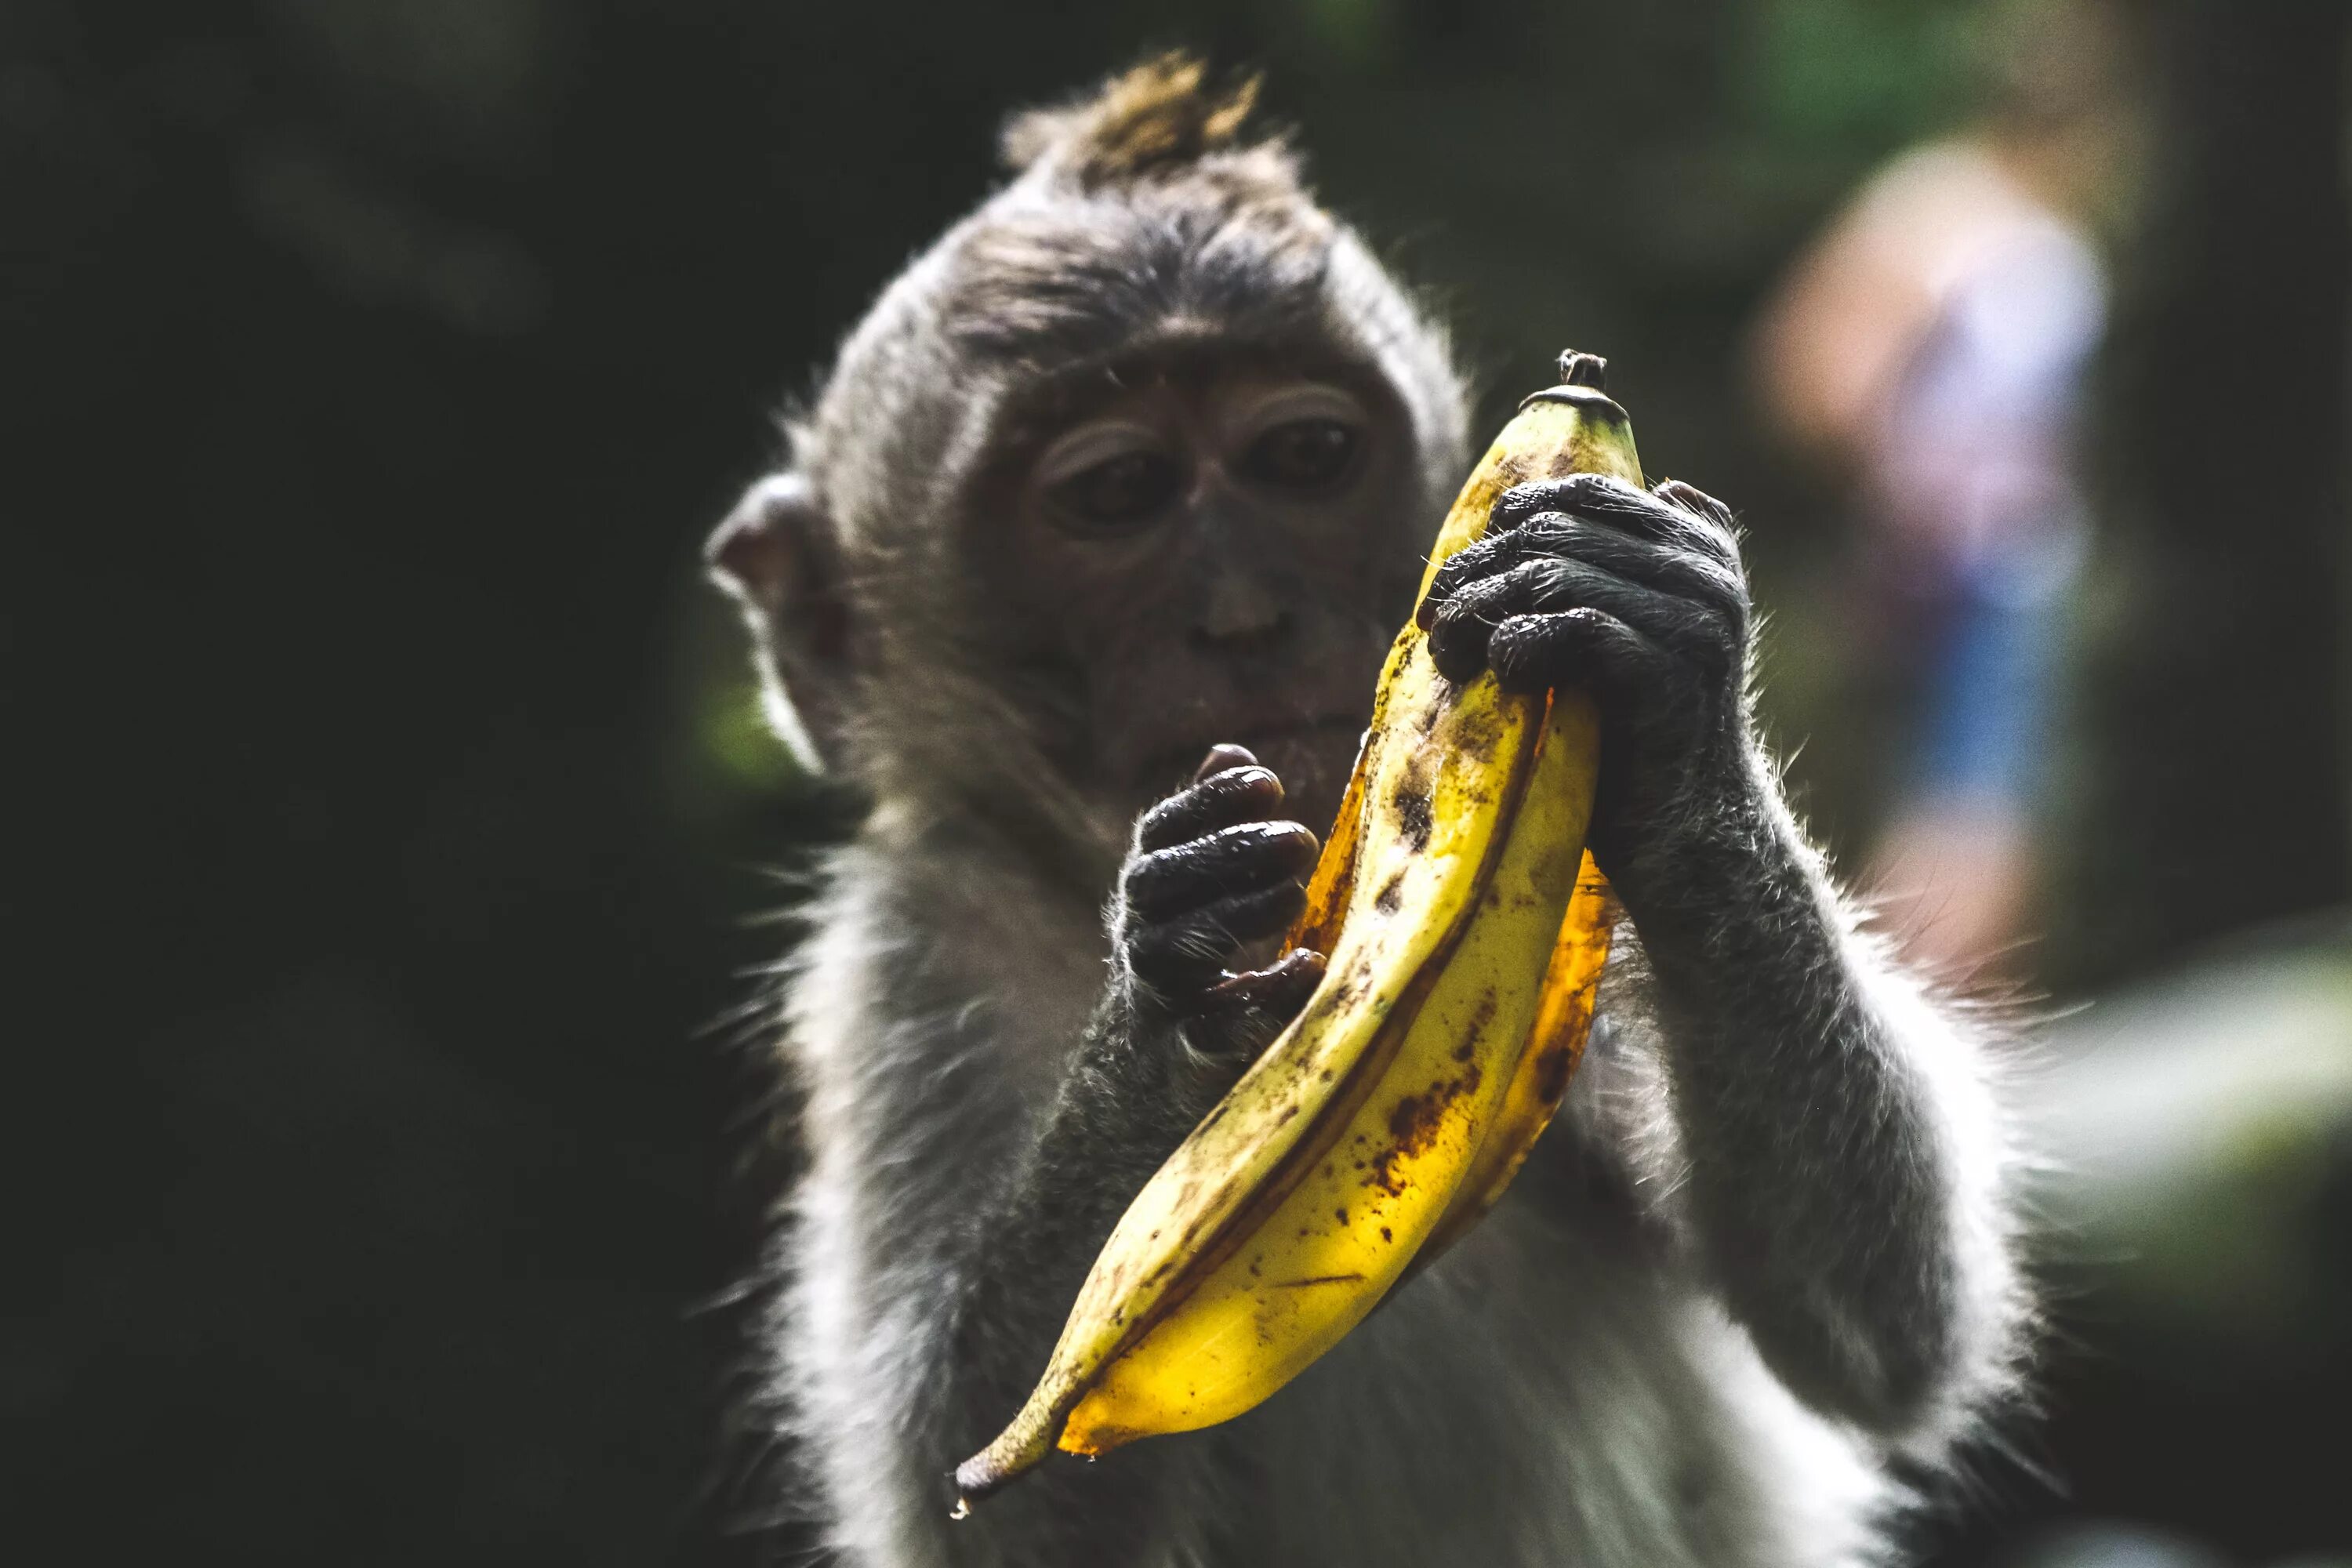 Обезьяна с бананом. Бибизьяна с бонаном. Obezyano s bansnom. Шимпанзе с бананом. От улыбки обезьяна подавилася бананом